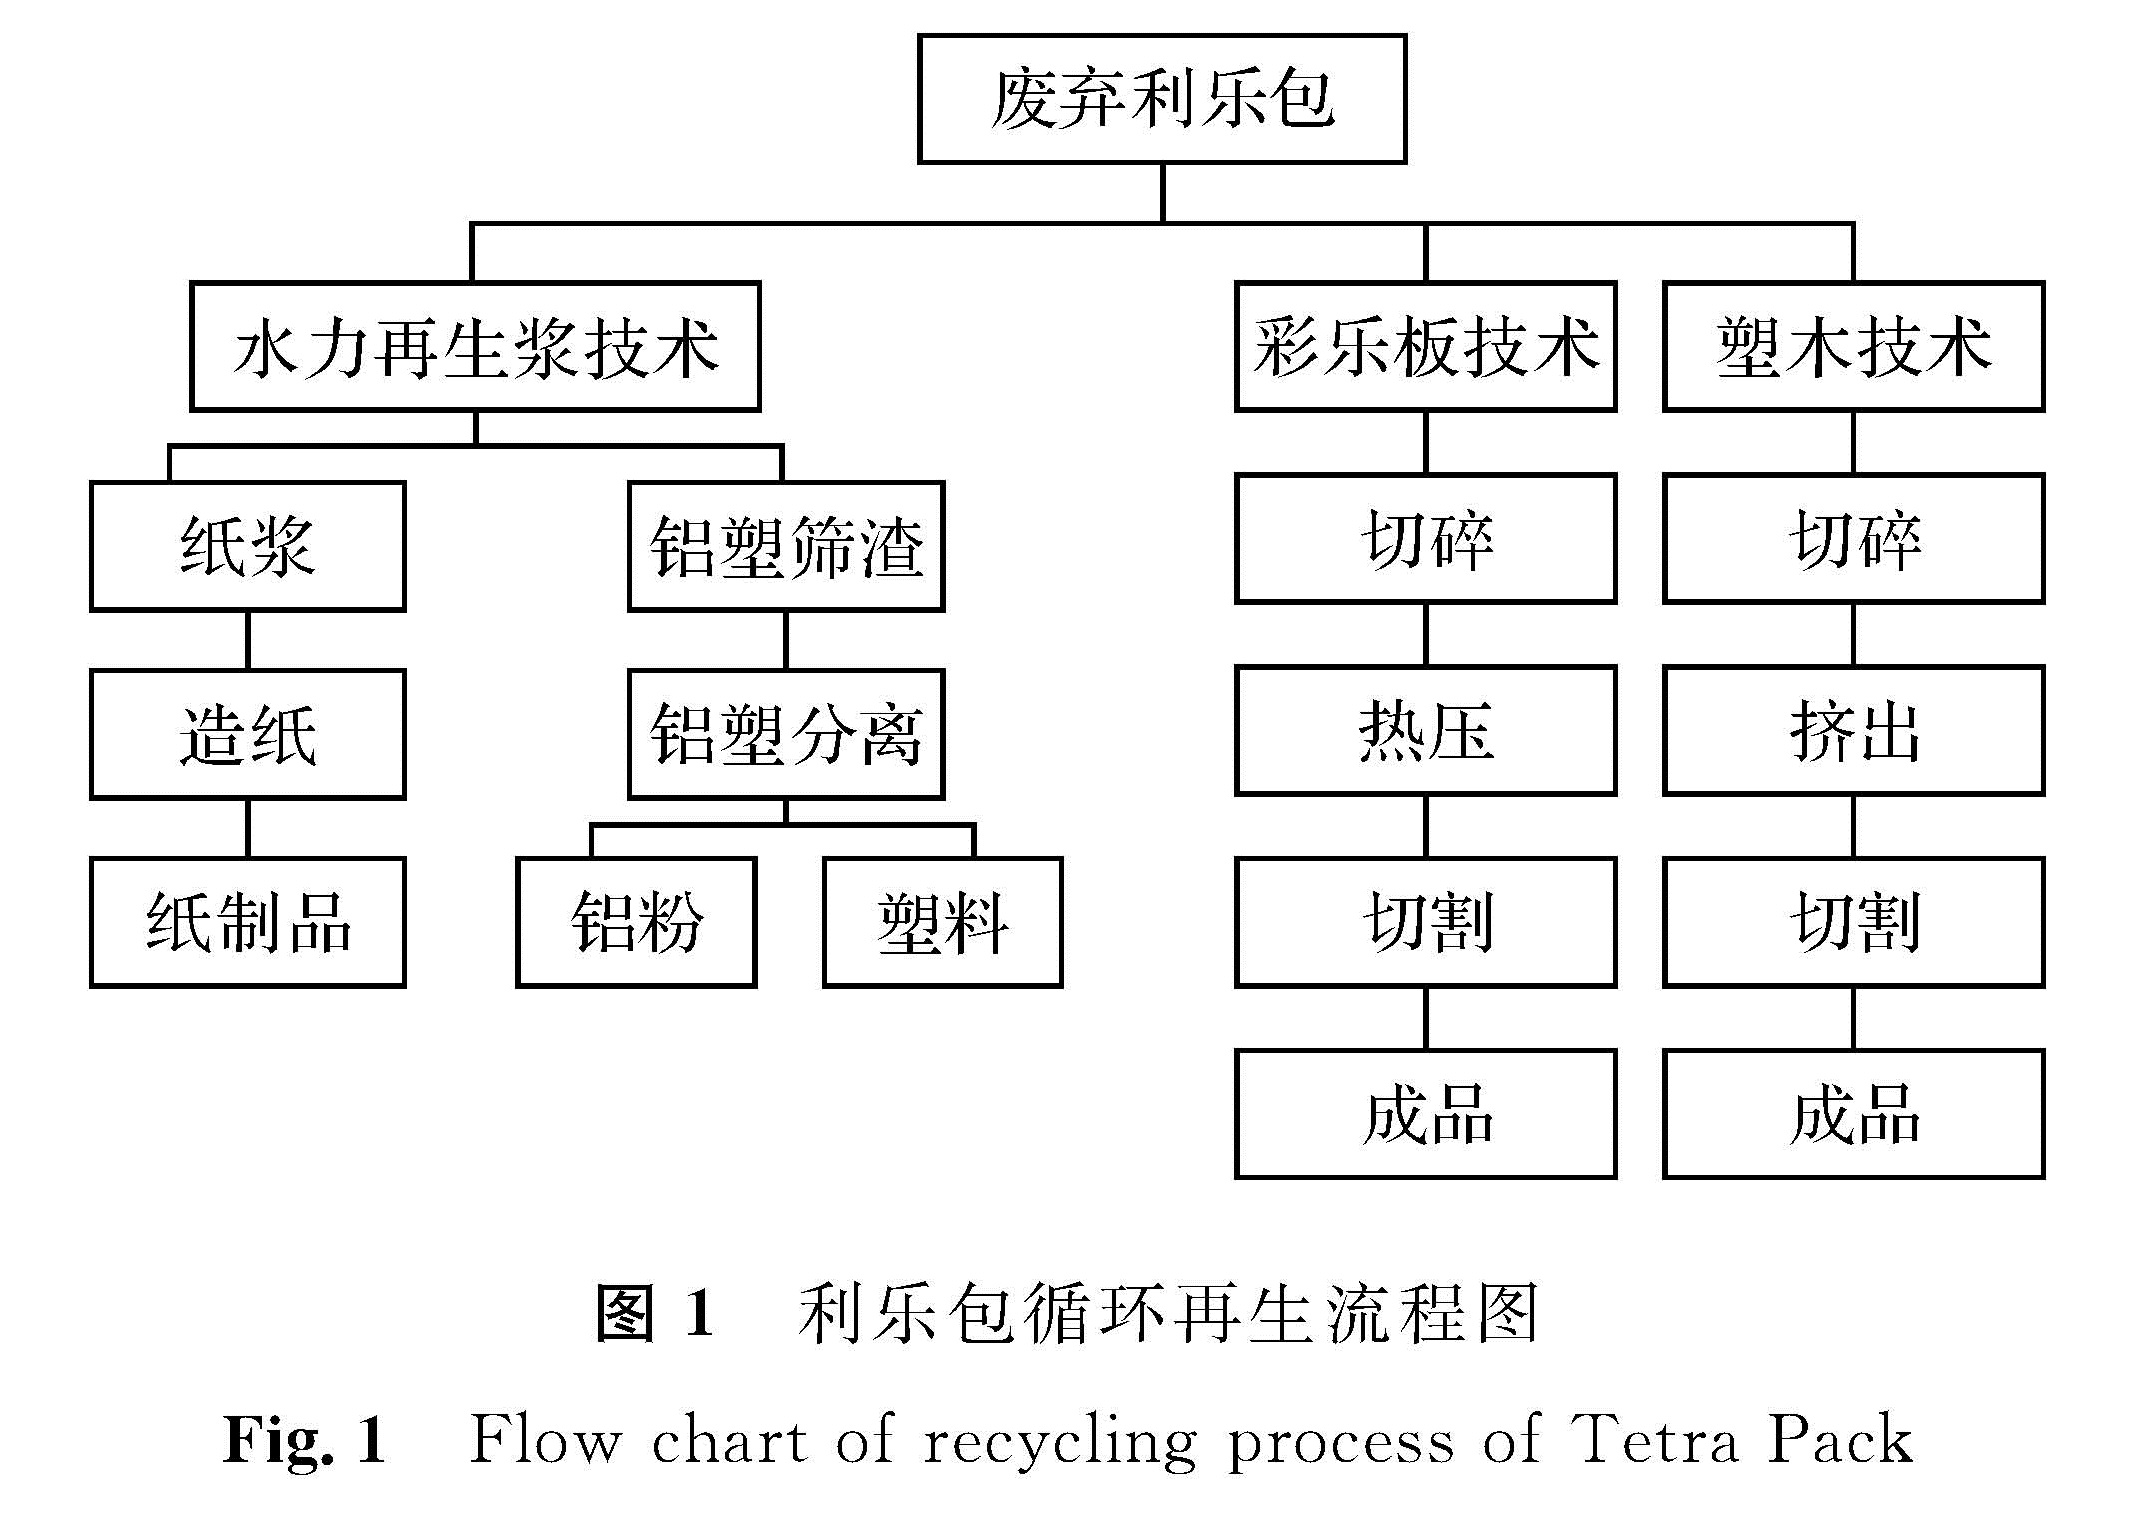 图1 利乐包循环再生流程图<br/>Fig.1 Flow chart of recycling process of Tetra Pack